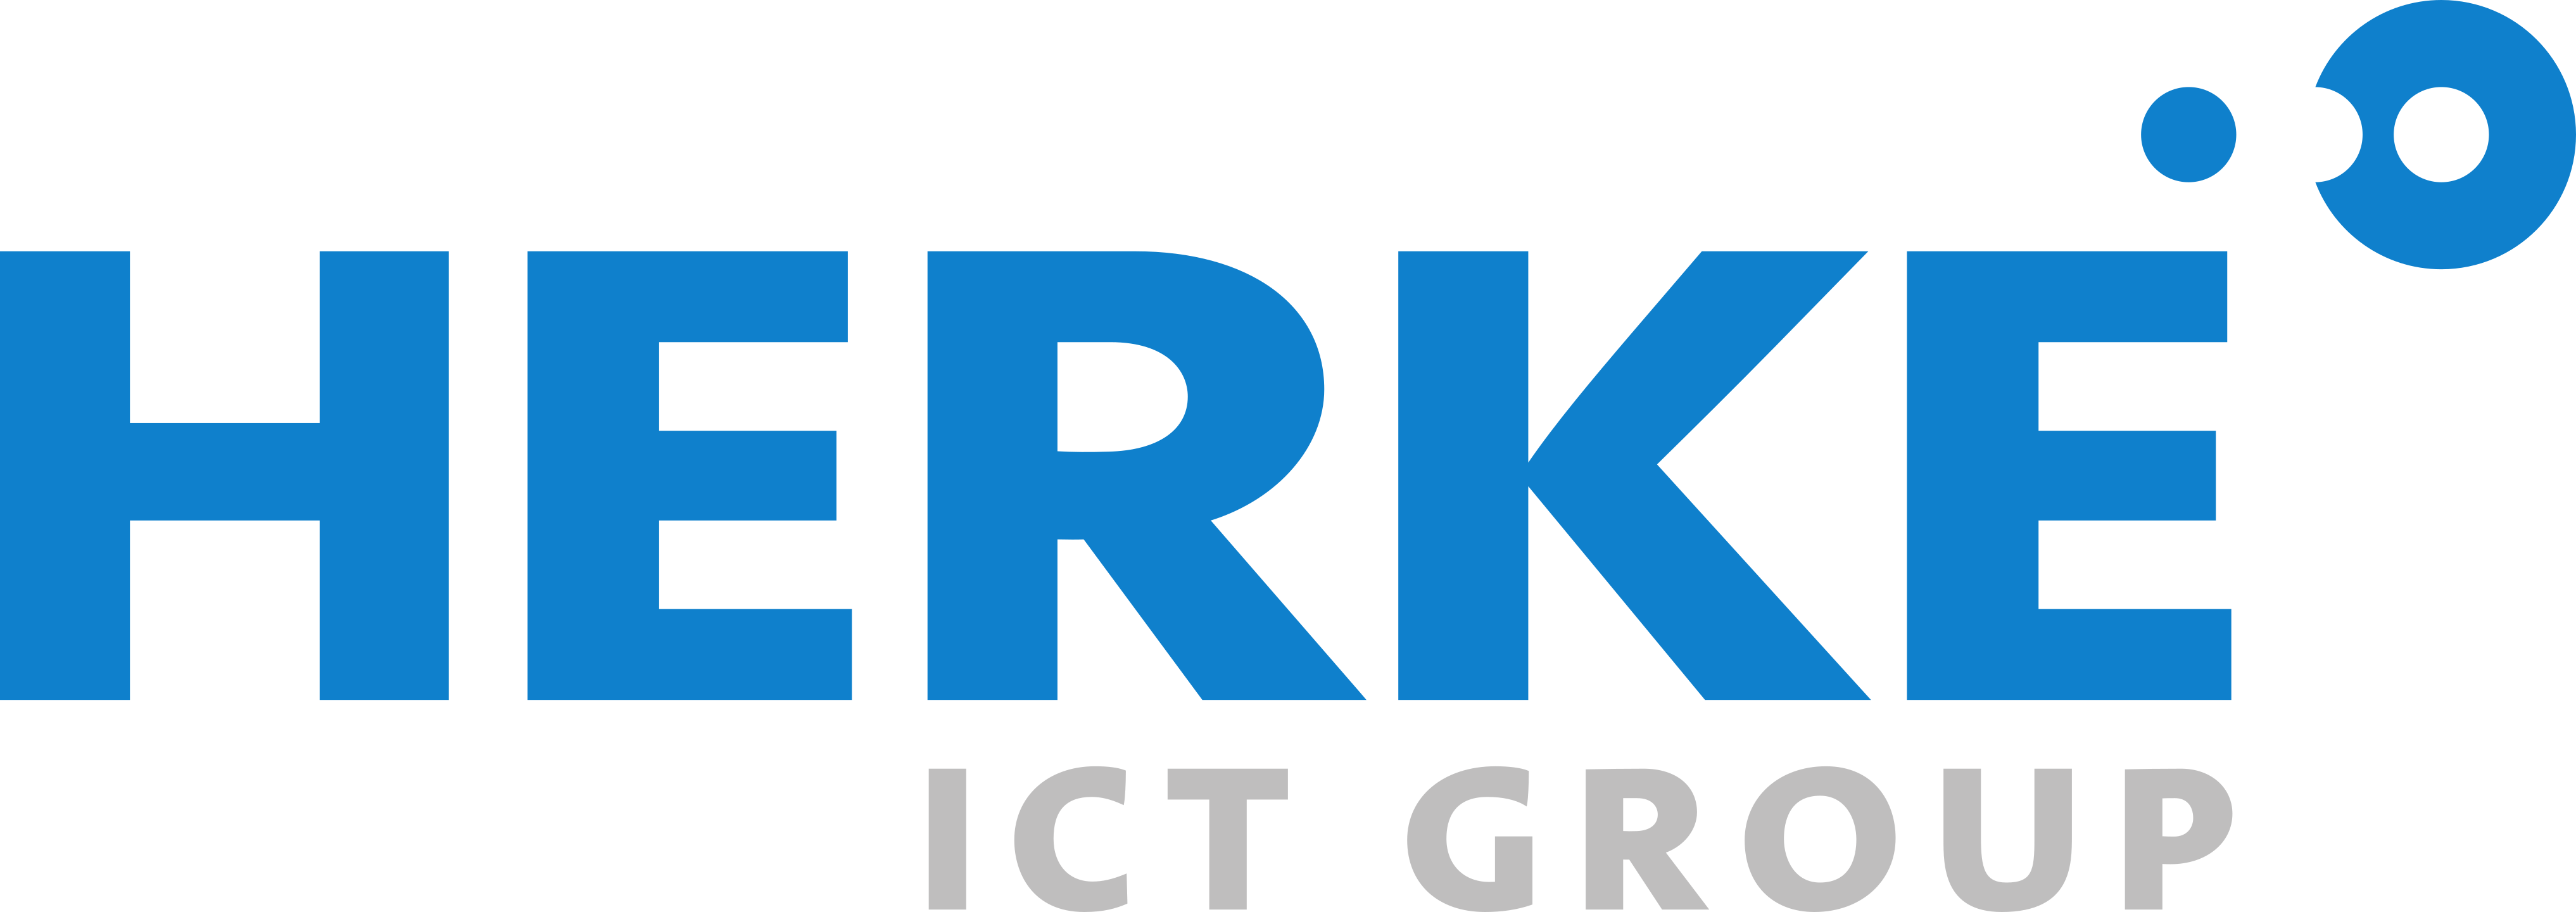 Logo Herke ICT Group groot 